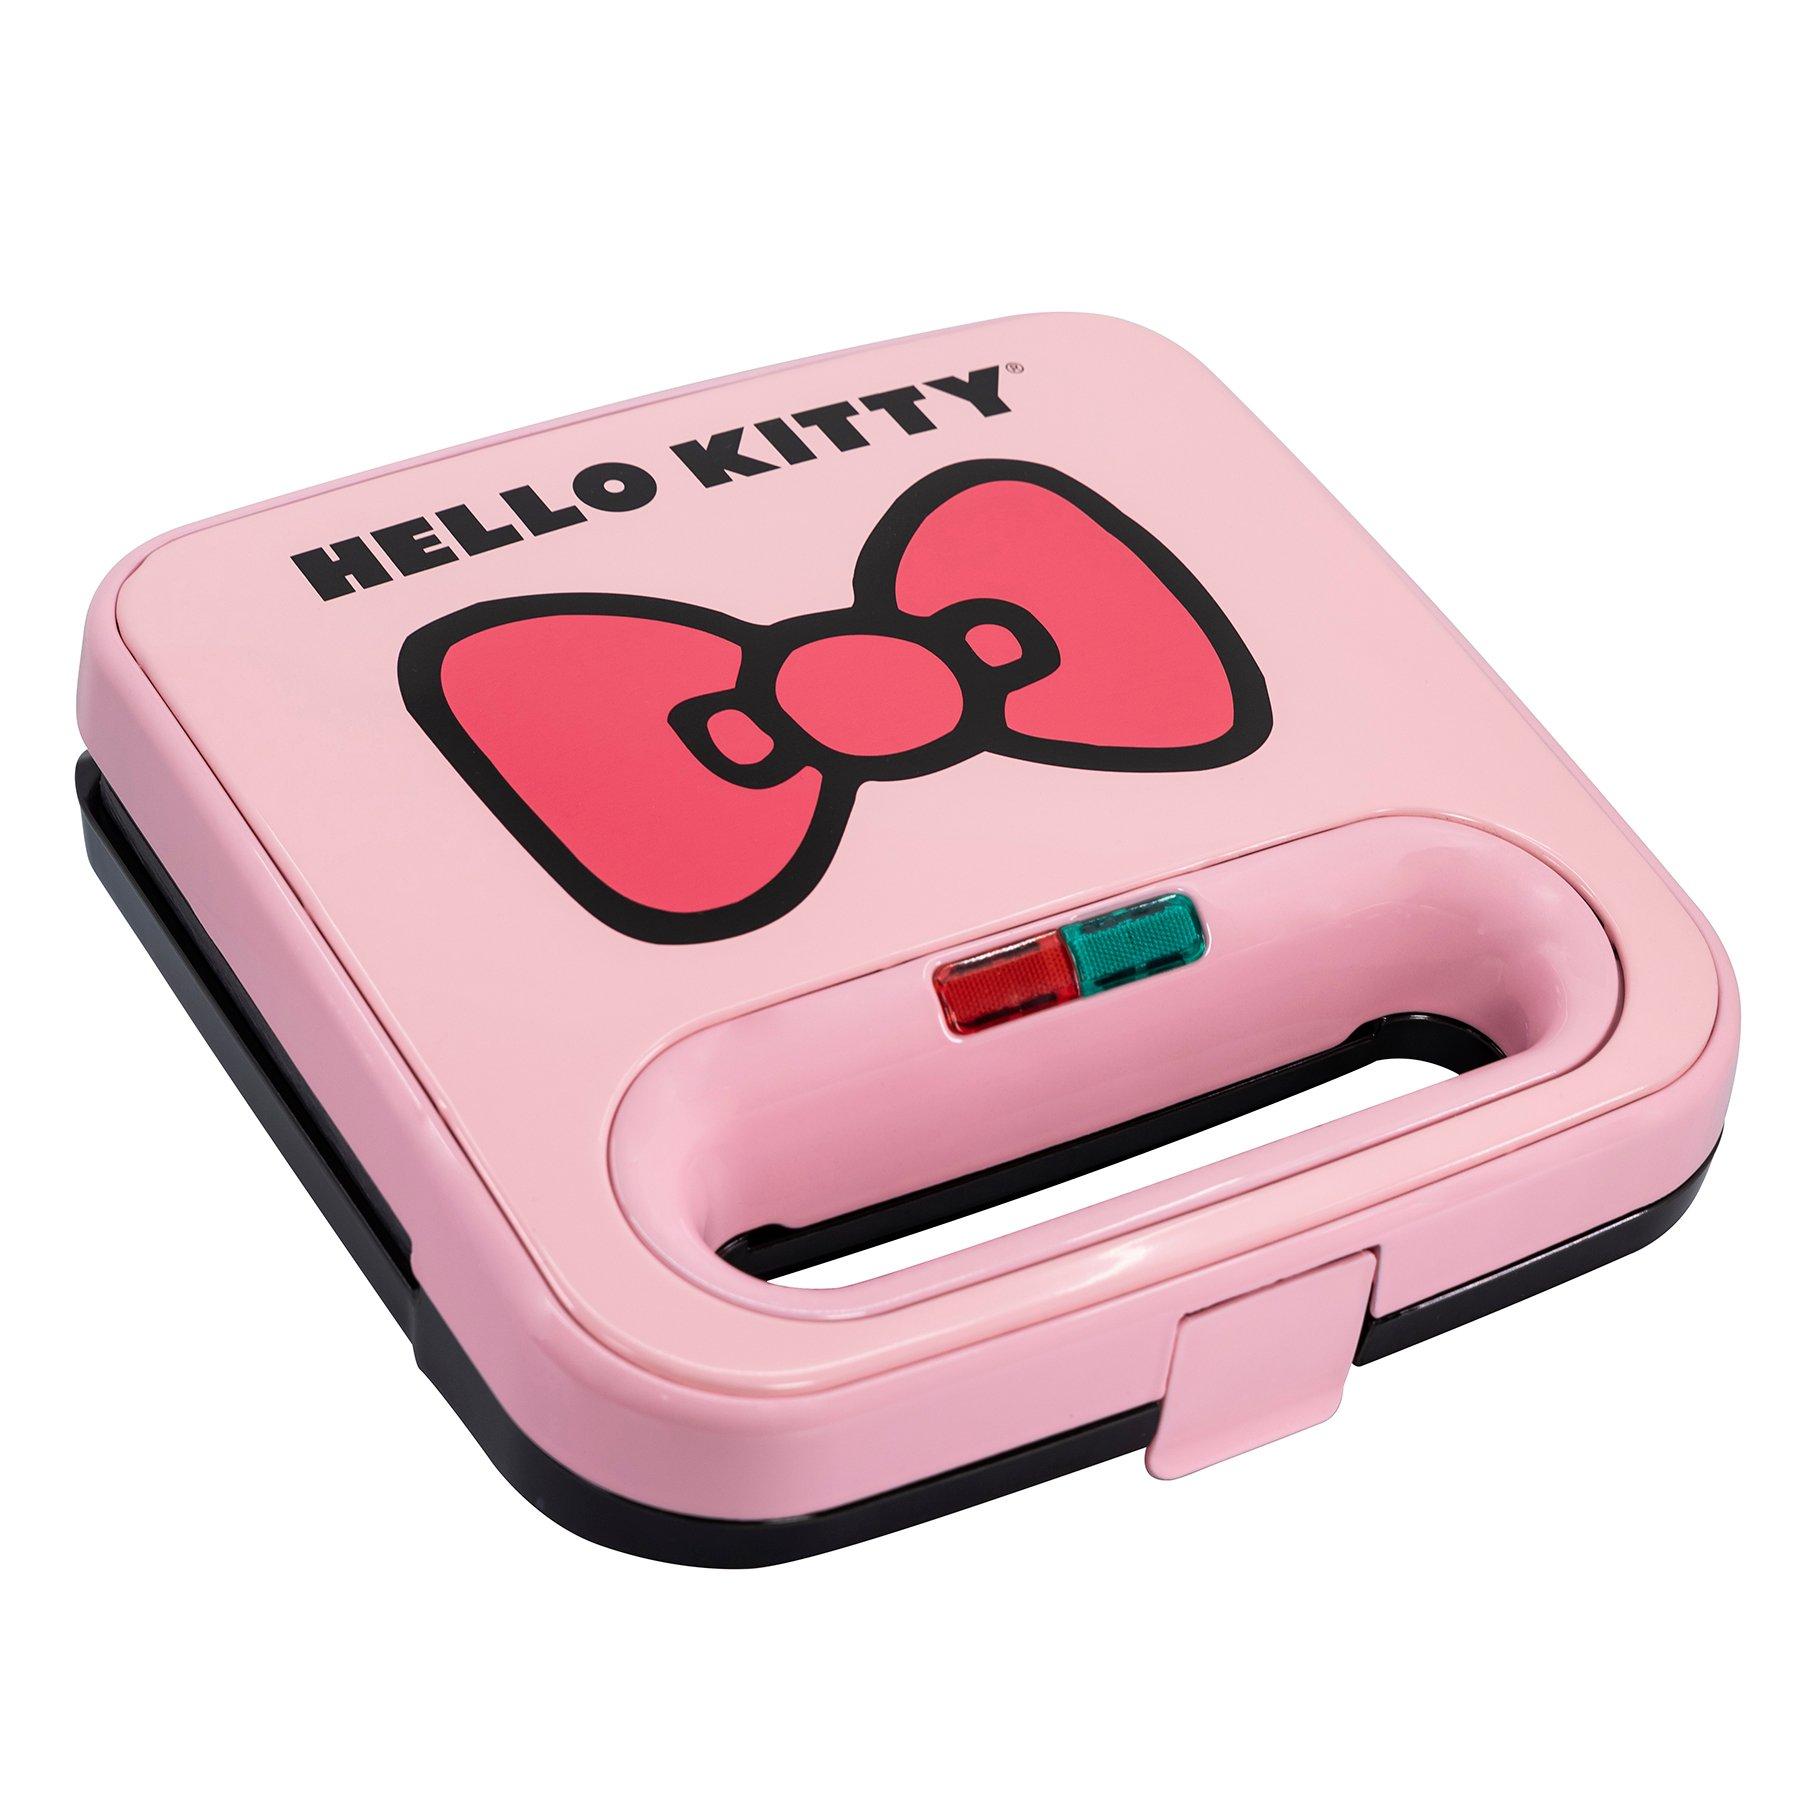 https://media.gamestop.com/i/gamestop/20005548/Hello-Kitty-Grilled-Cheese-Maker?$pdp$